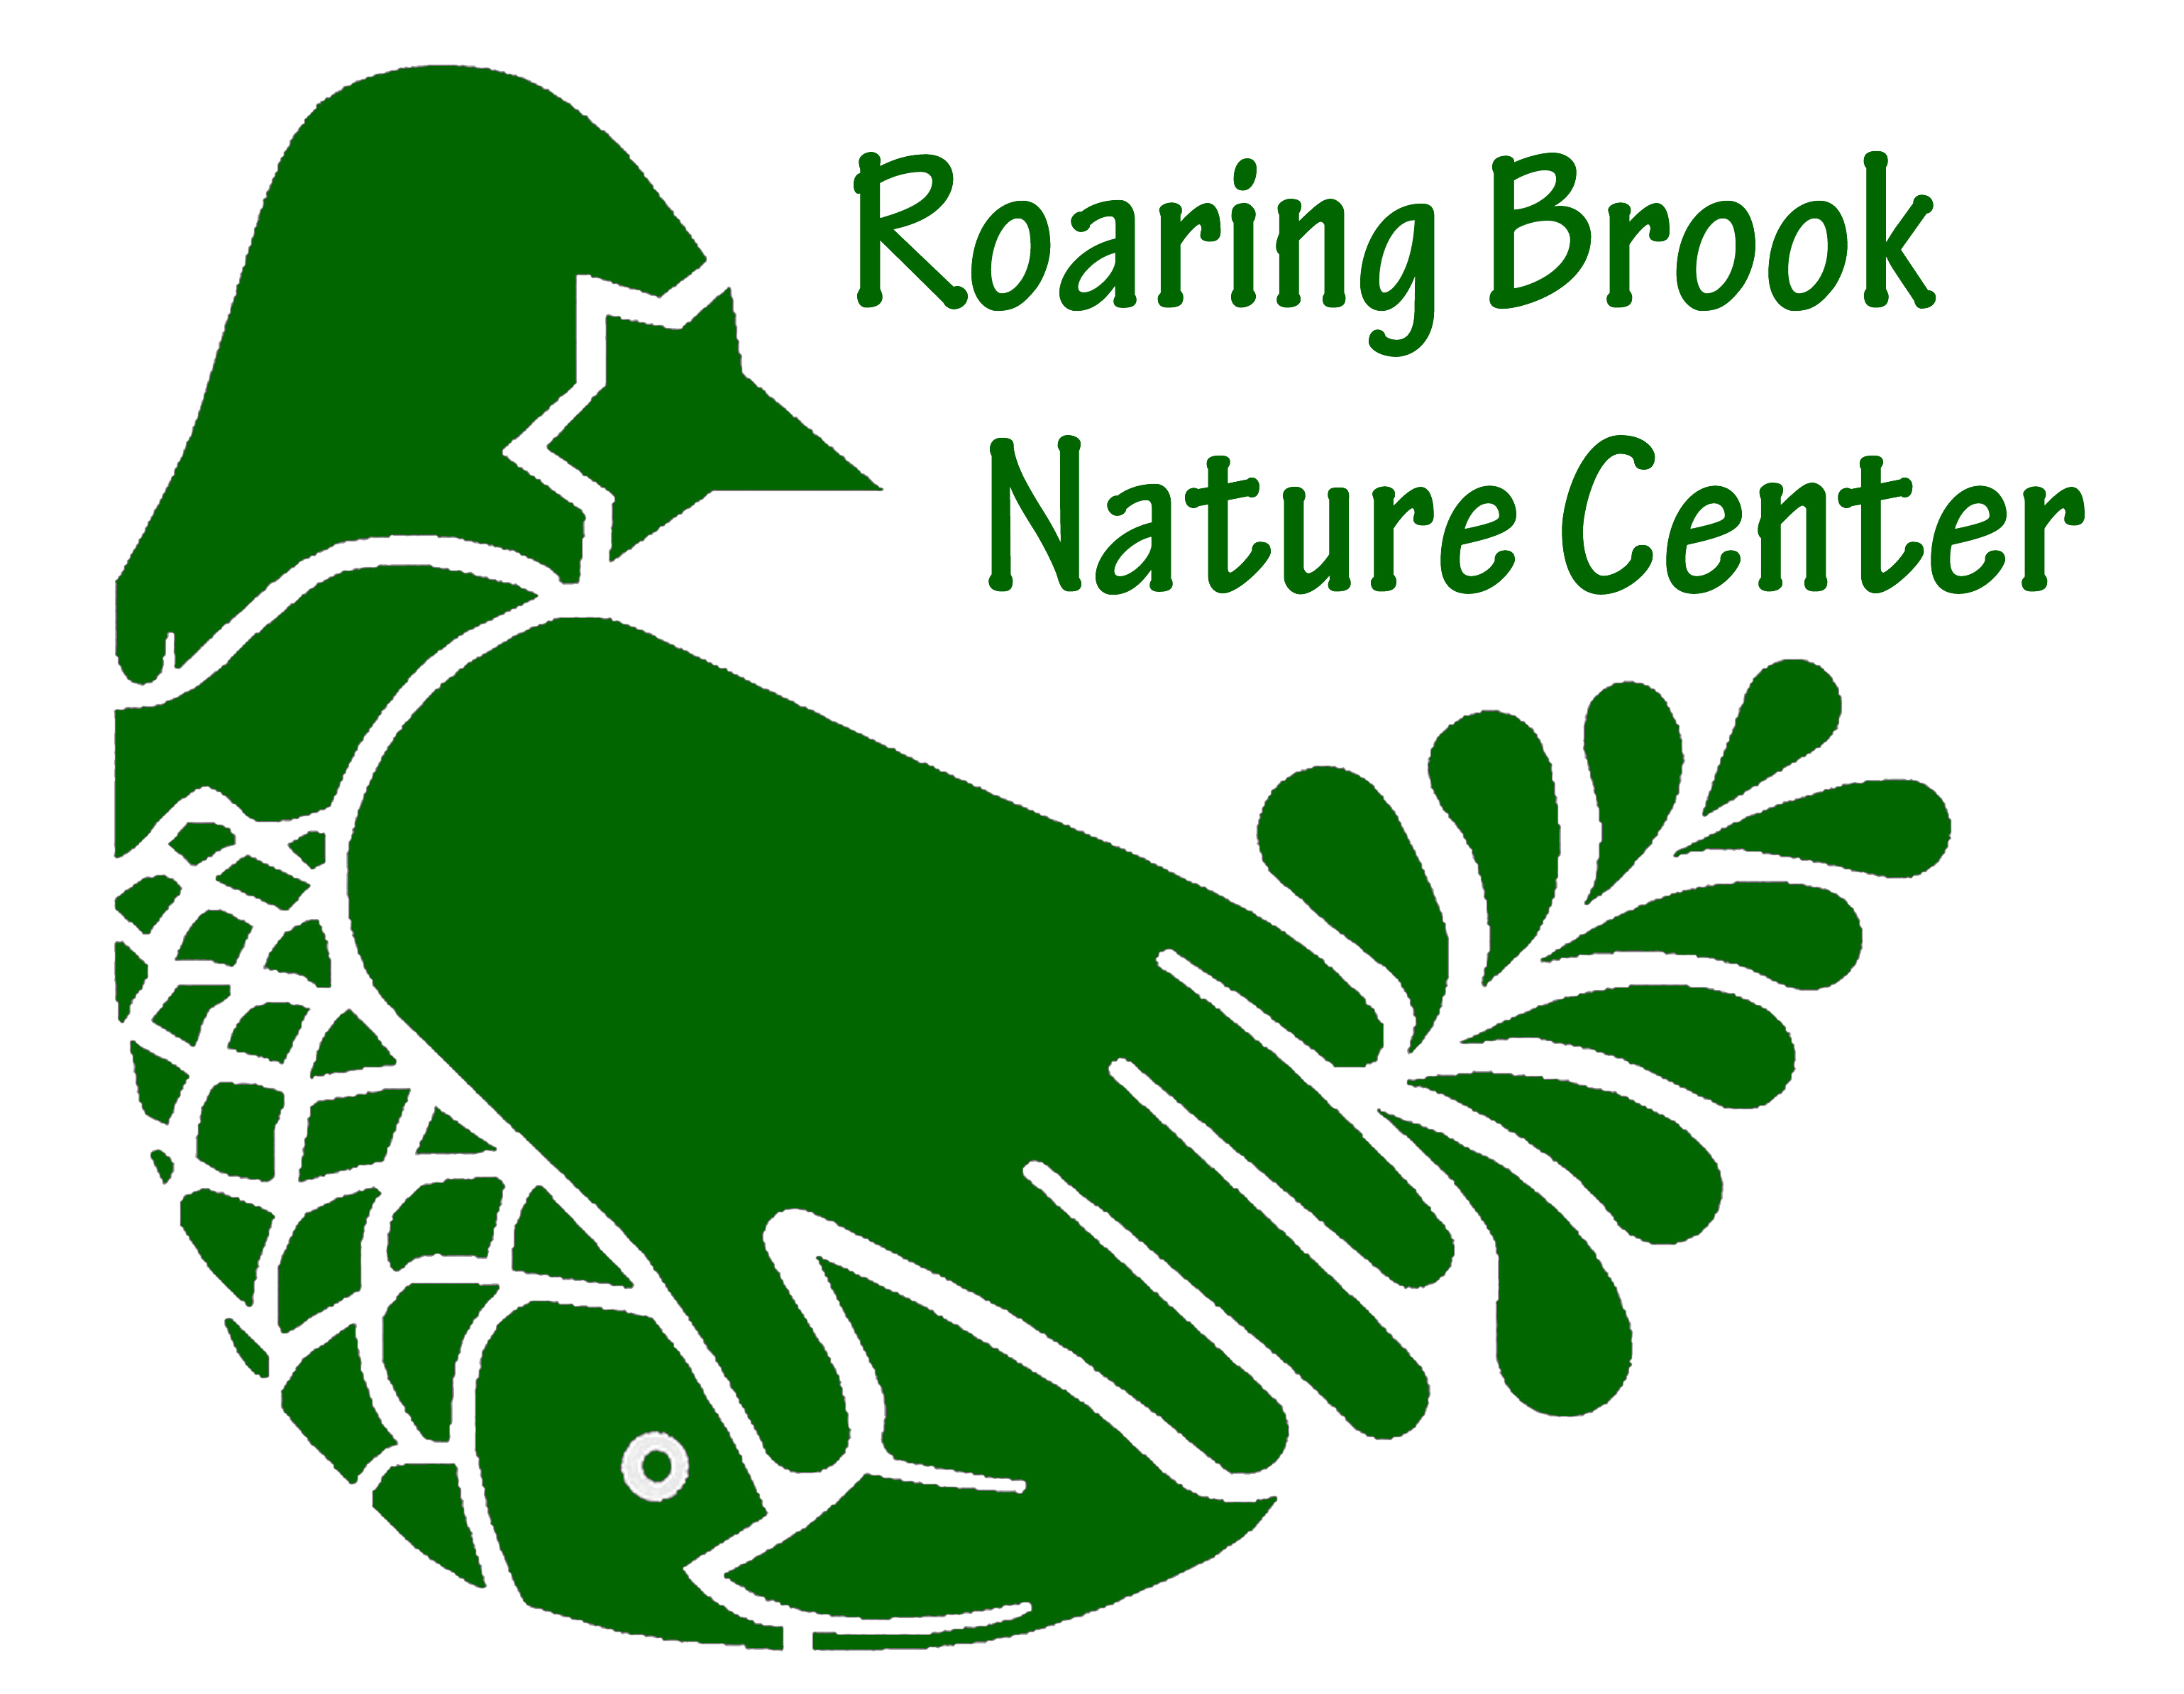 Roaring Brook Nature Center